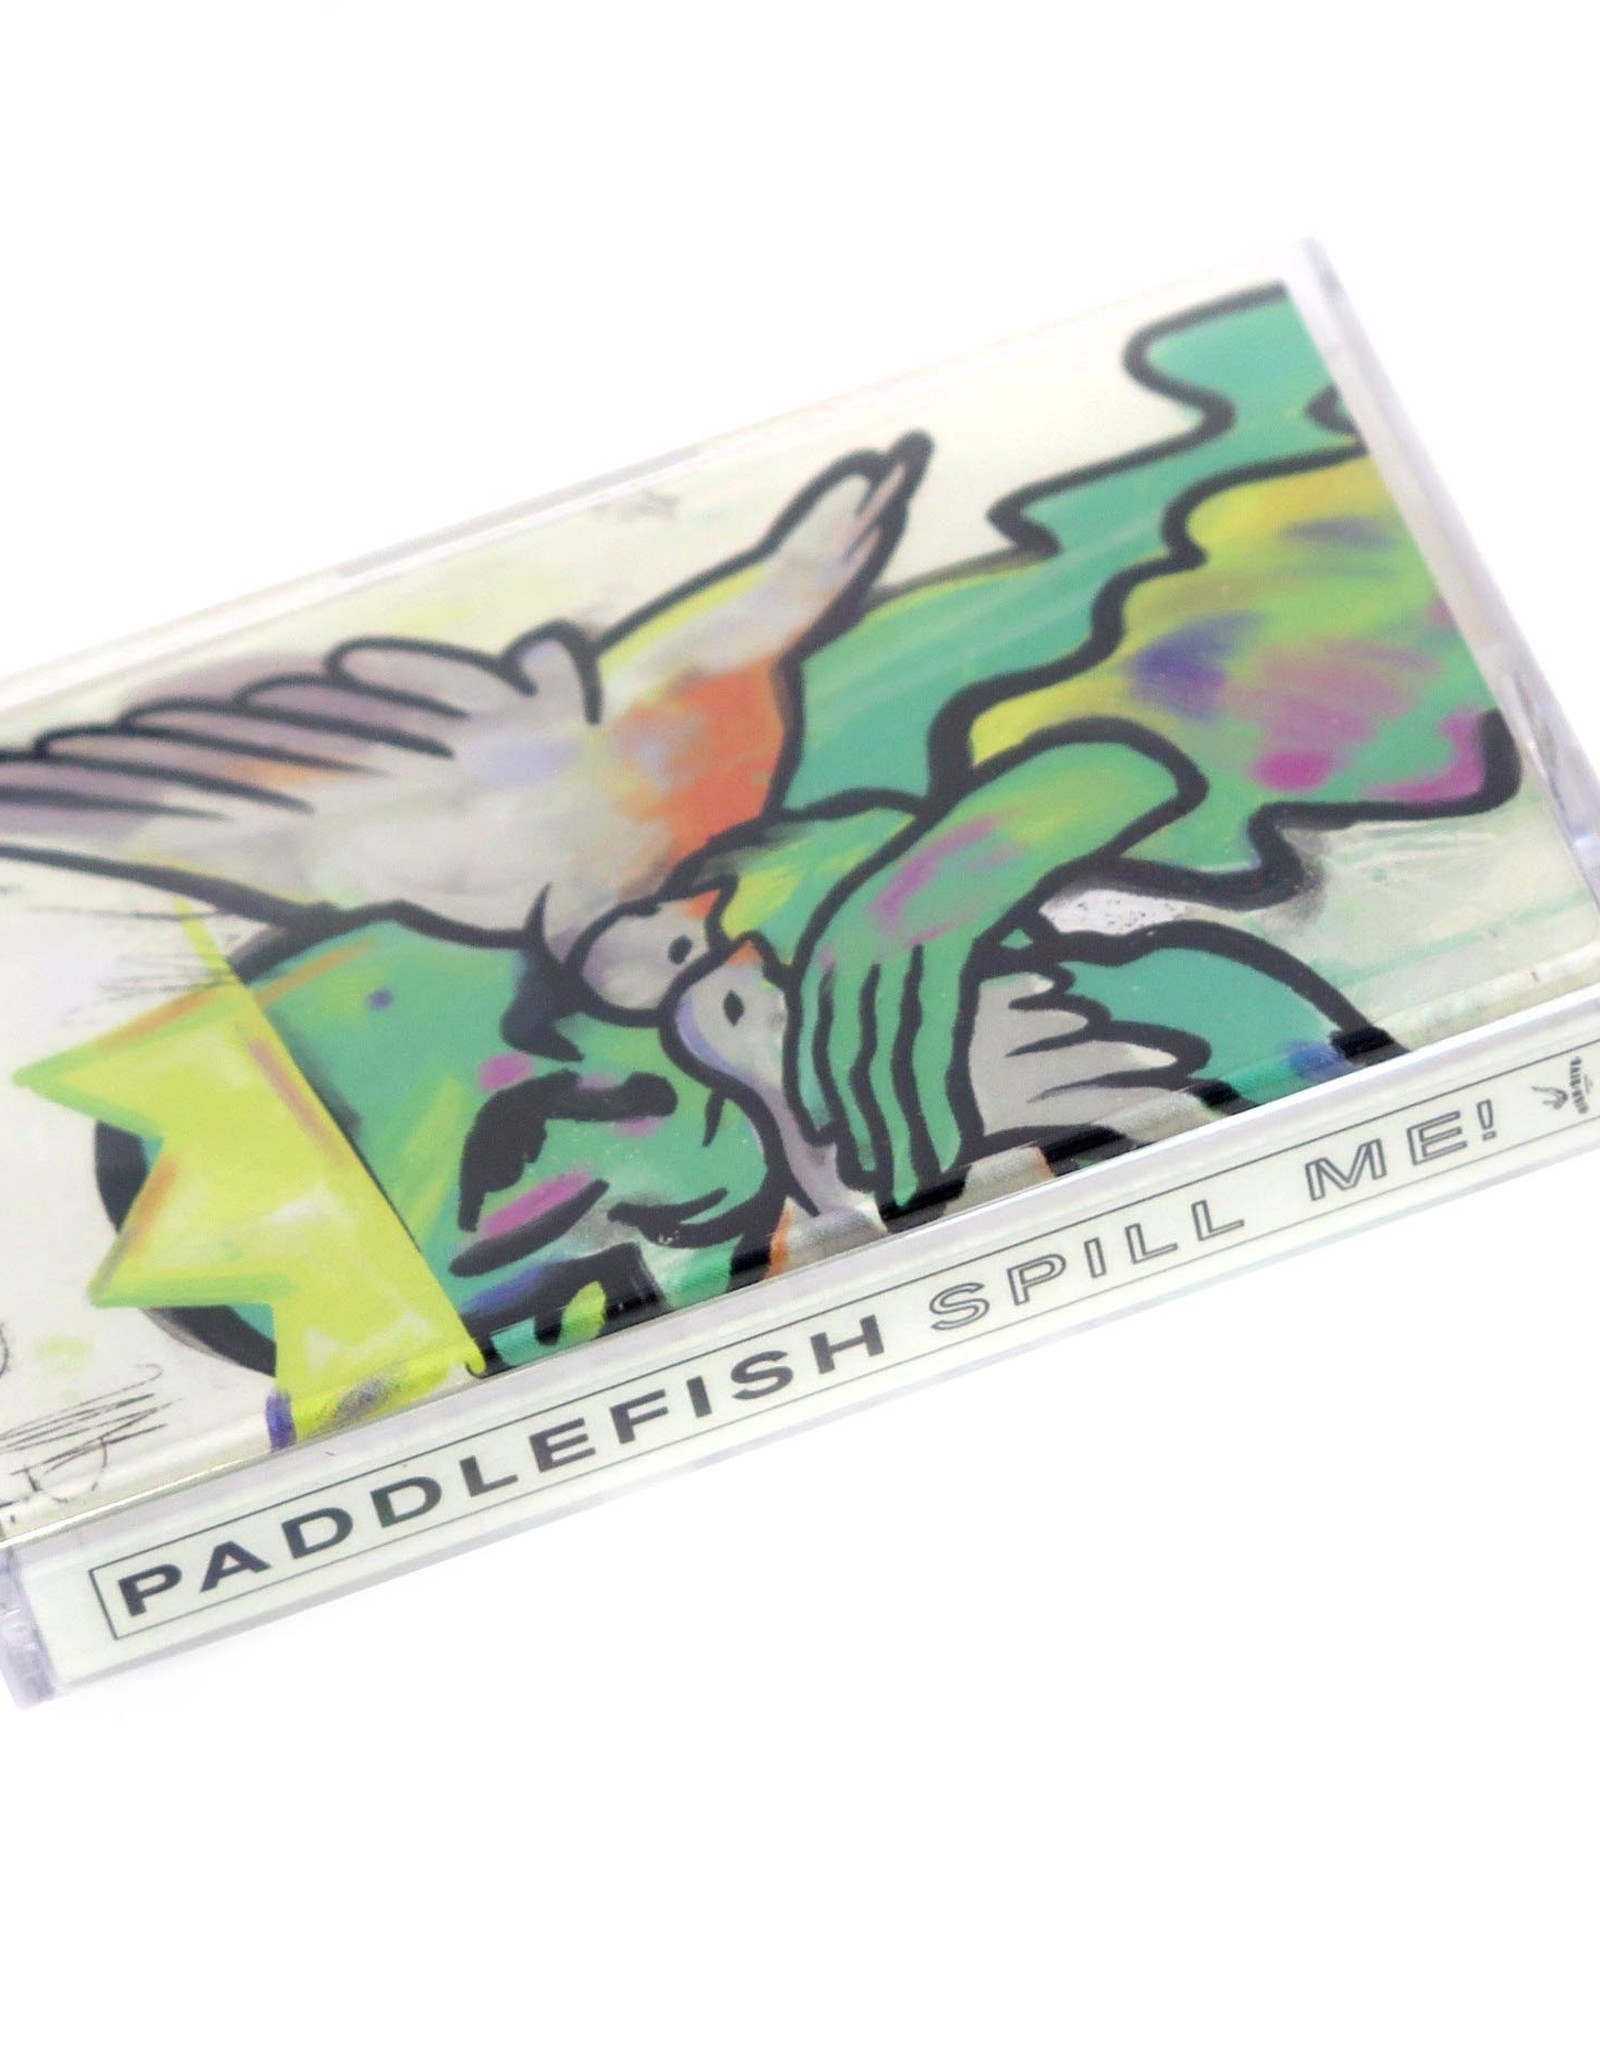 Paddlefish Spill Me! Tape by Paddlefish